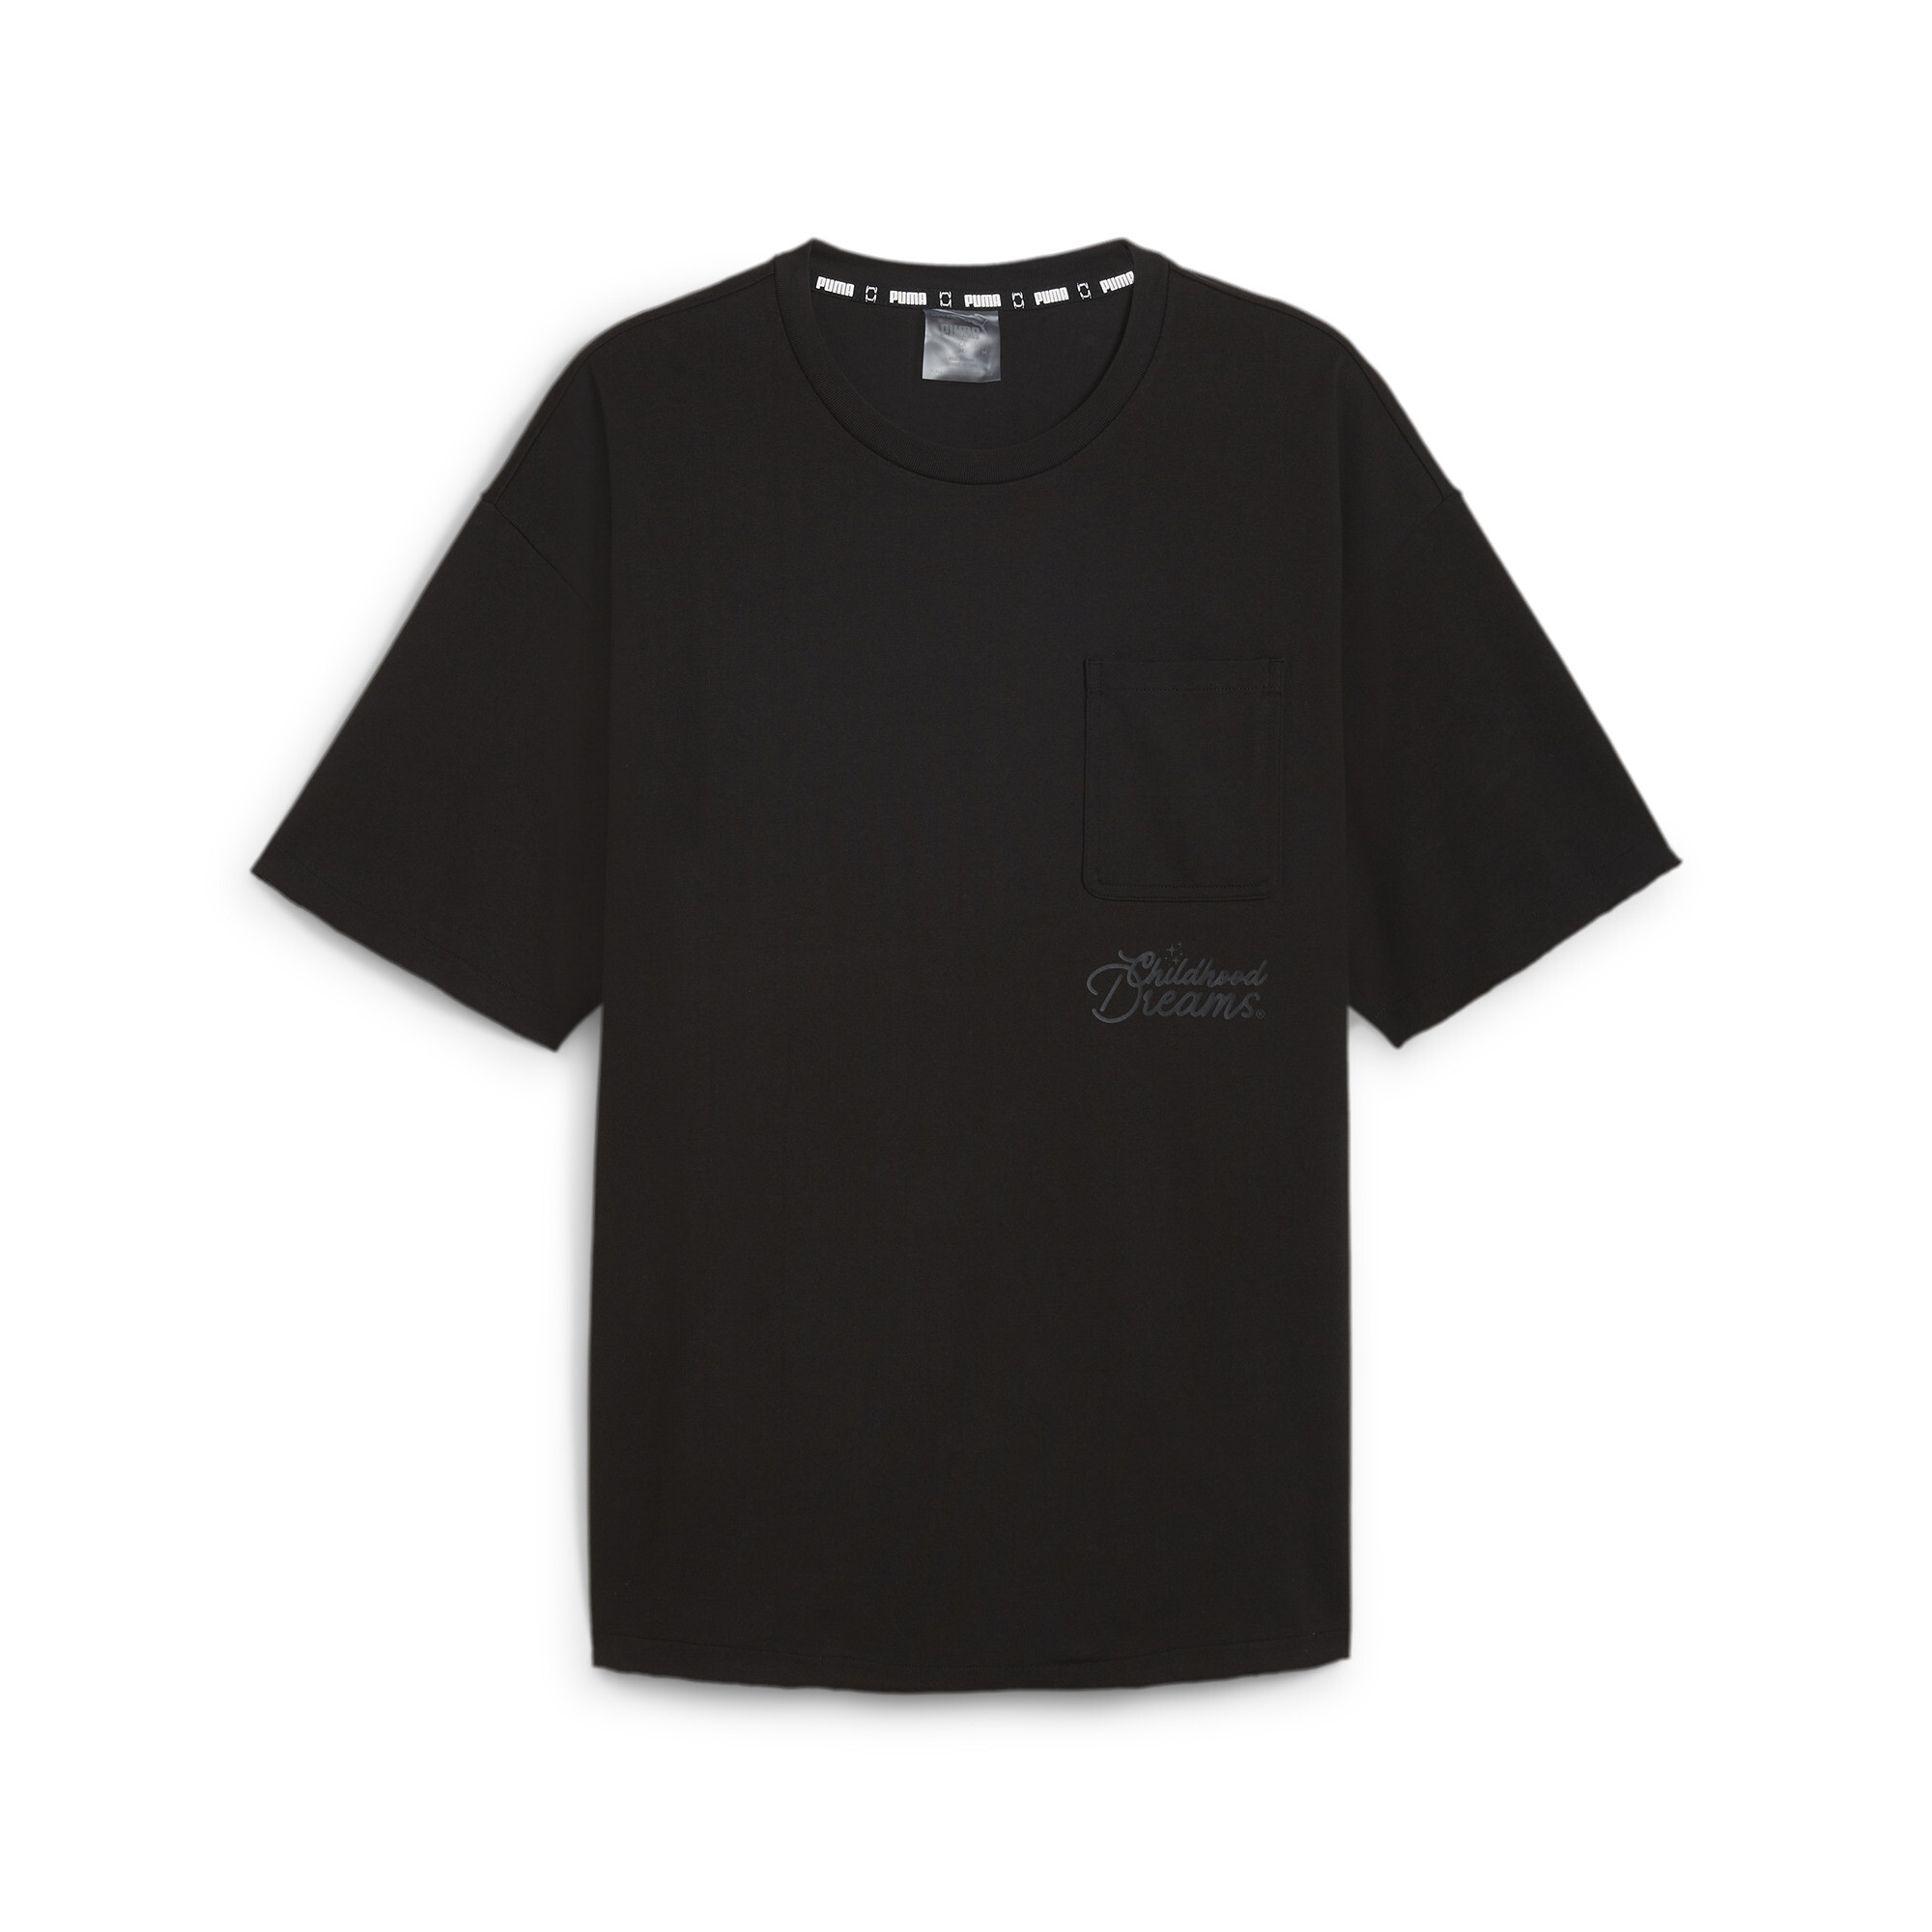 Men's PUMA X CHILDHOOD DREAMS Mesmerize Basketball T-Shirt In Black, Size Large